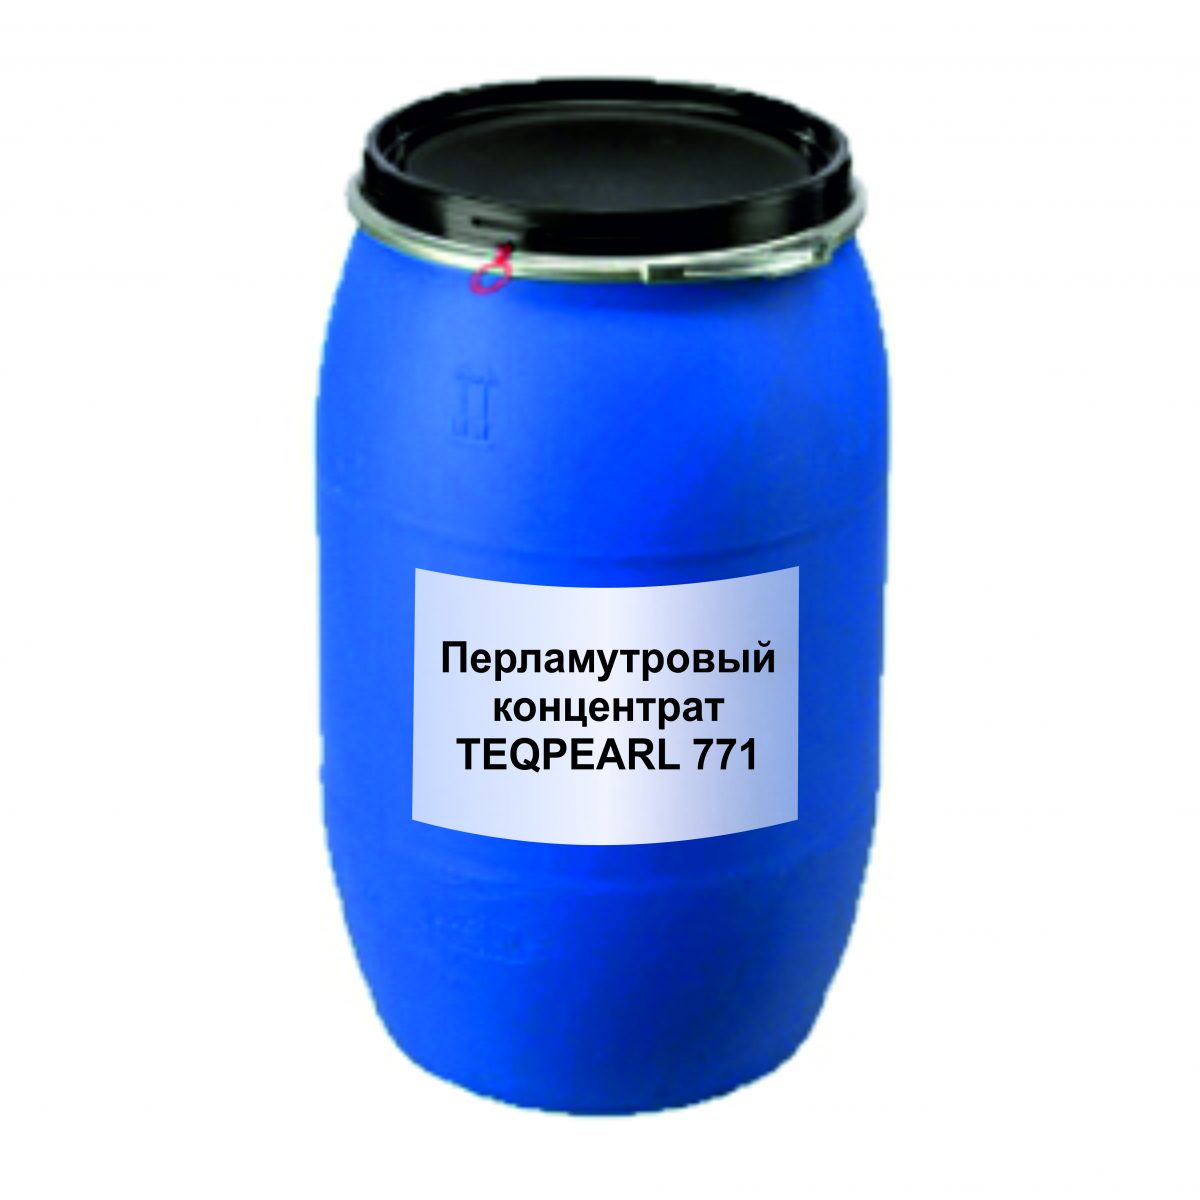 Перламутровый концентрат TEQPEARL 771 /бочка 205 кг